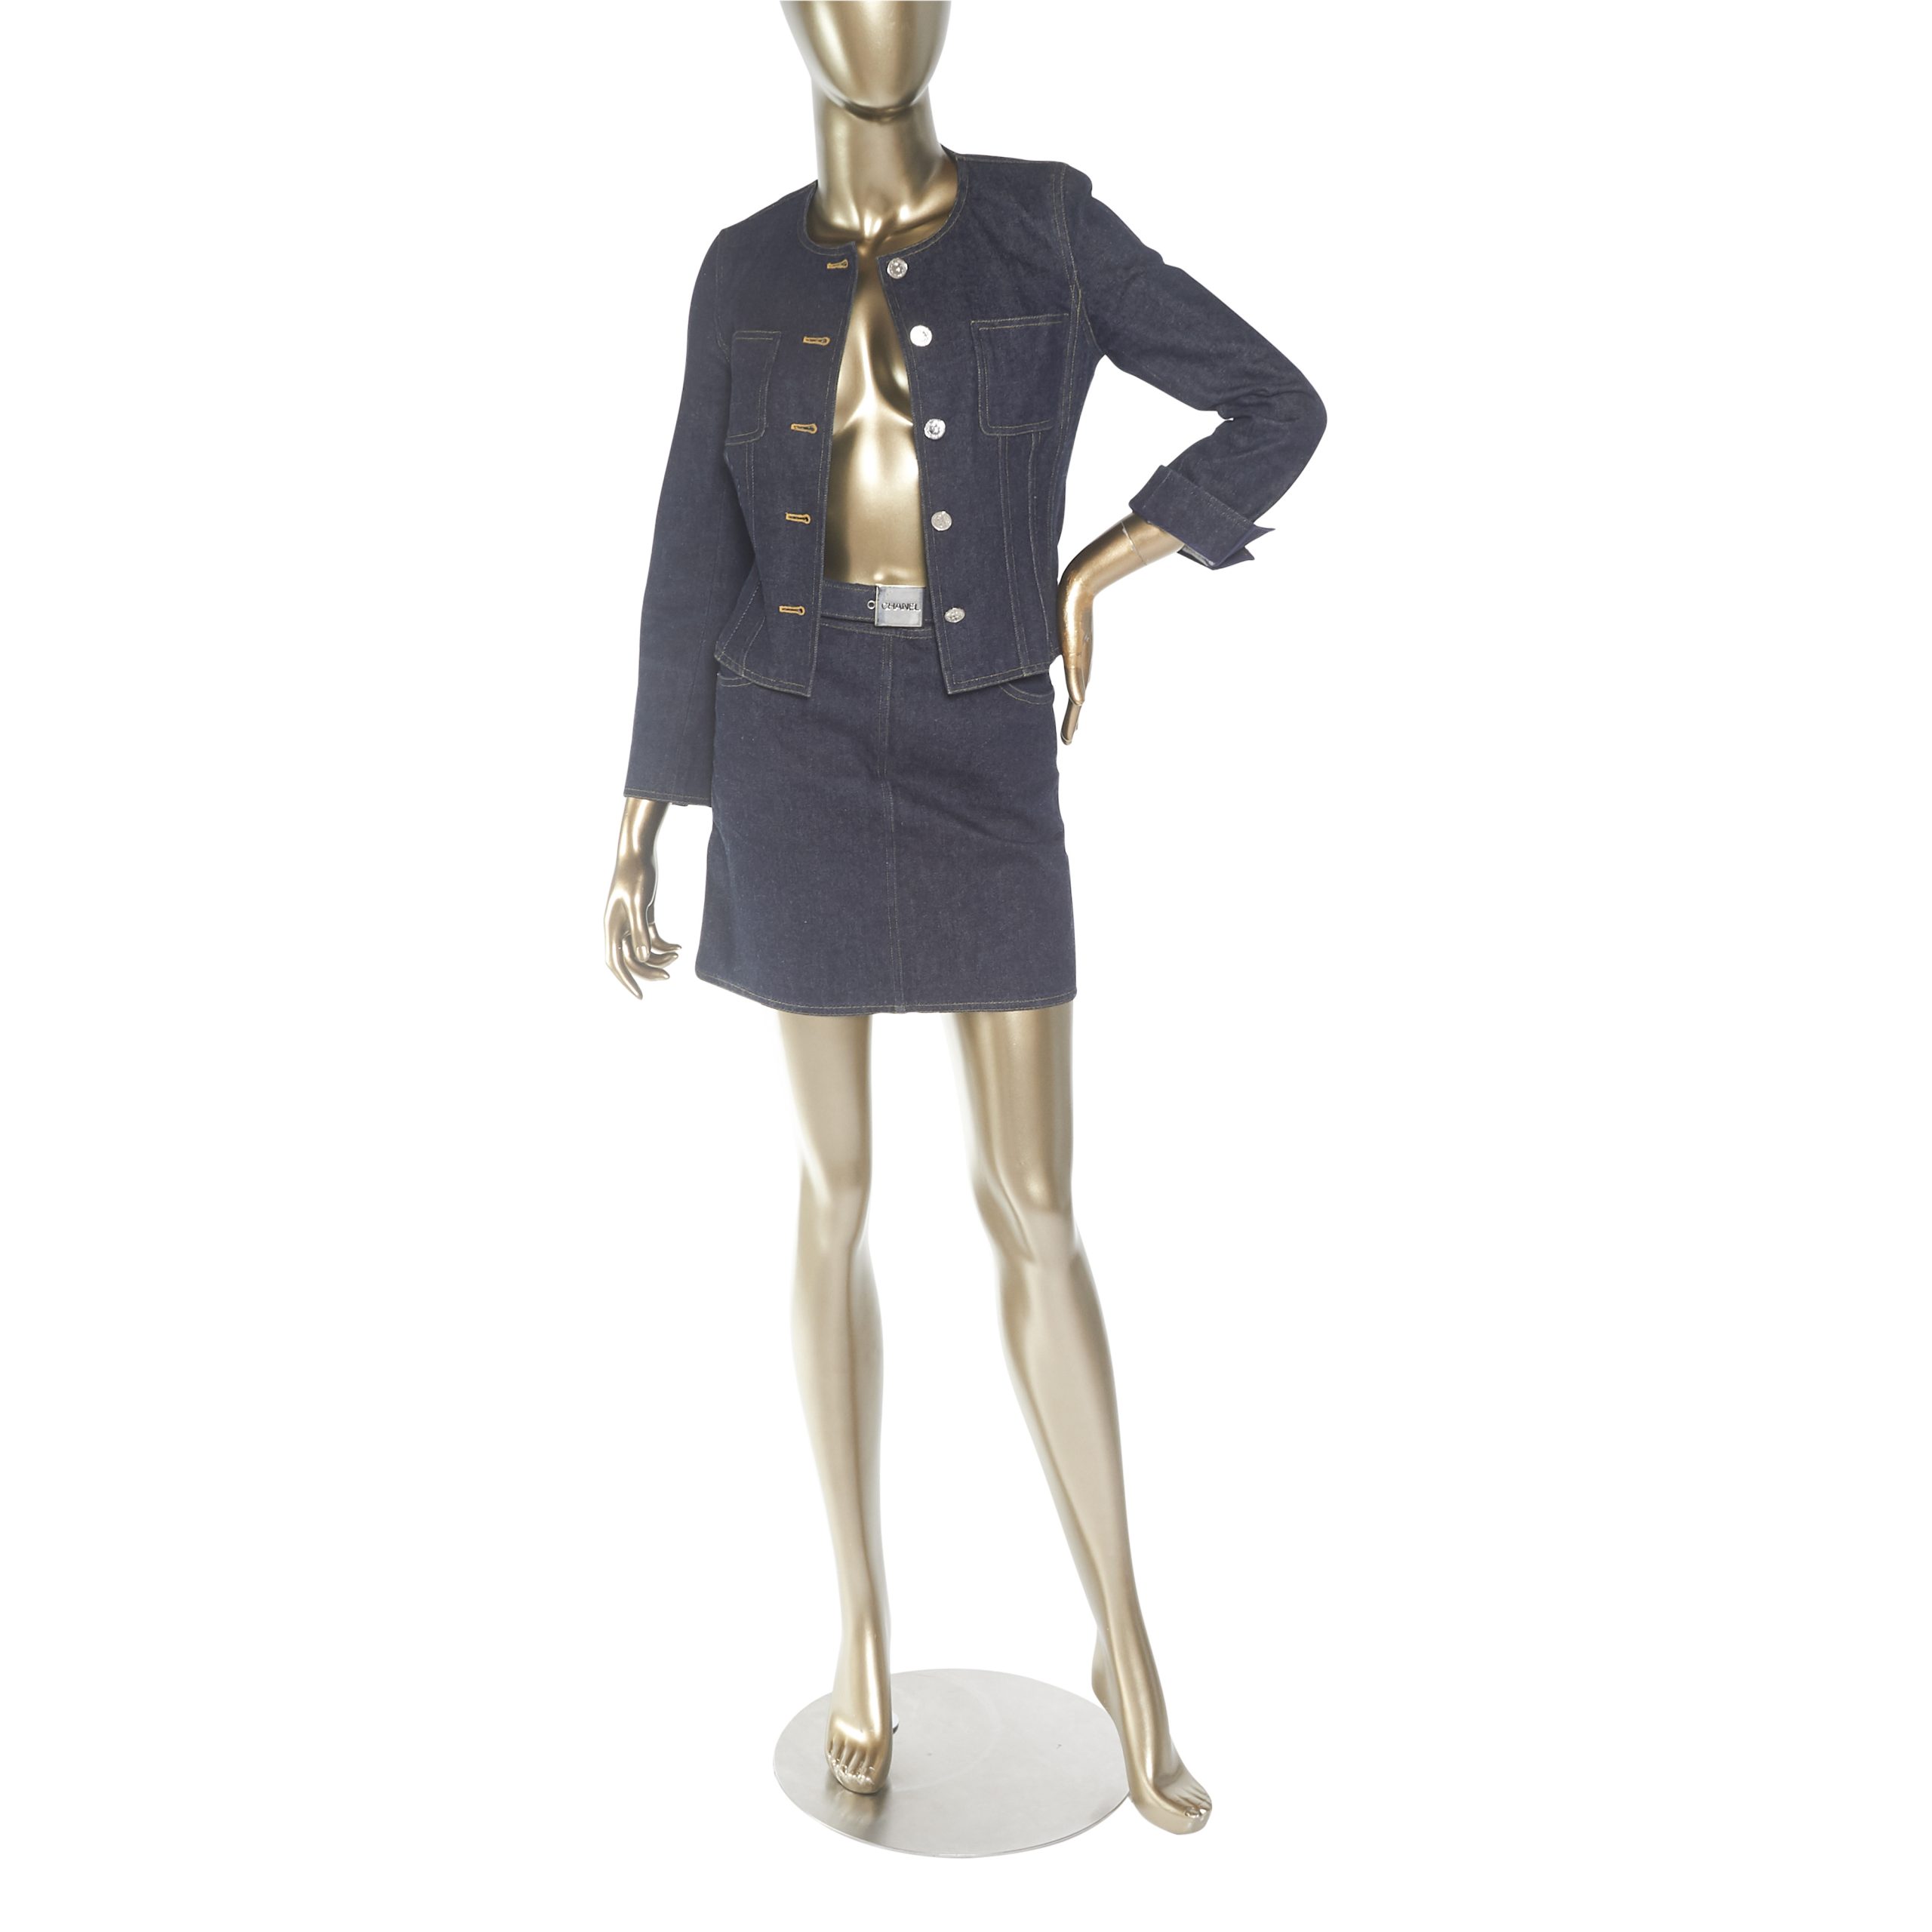 Chanel Vintage 2-Piece Jacket and Skirt Suit Set - Janet Mandell